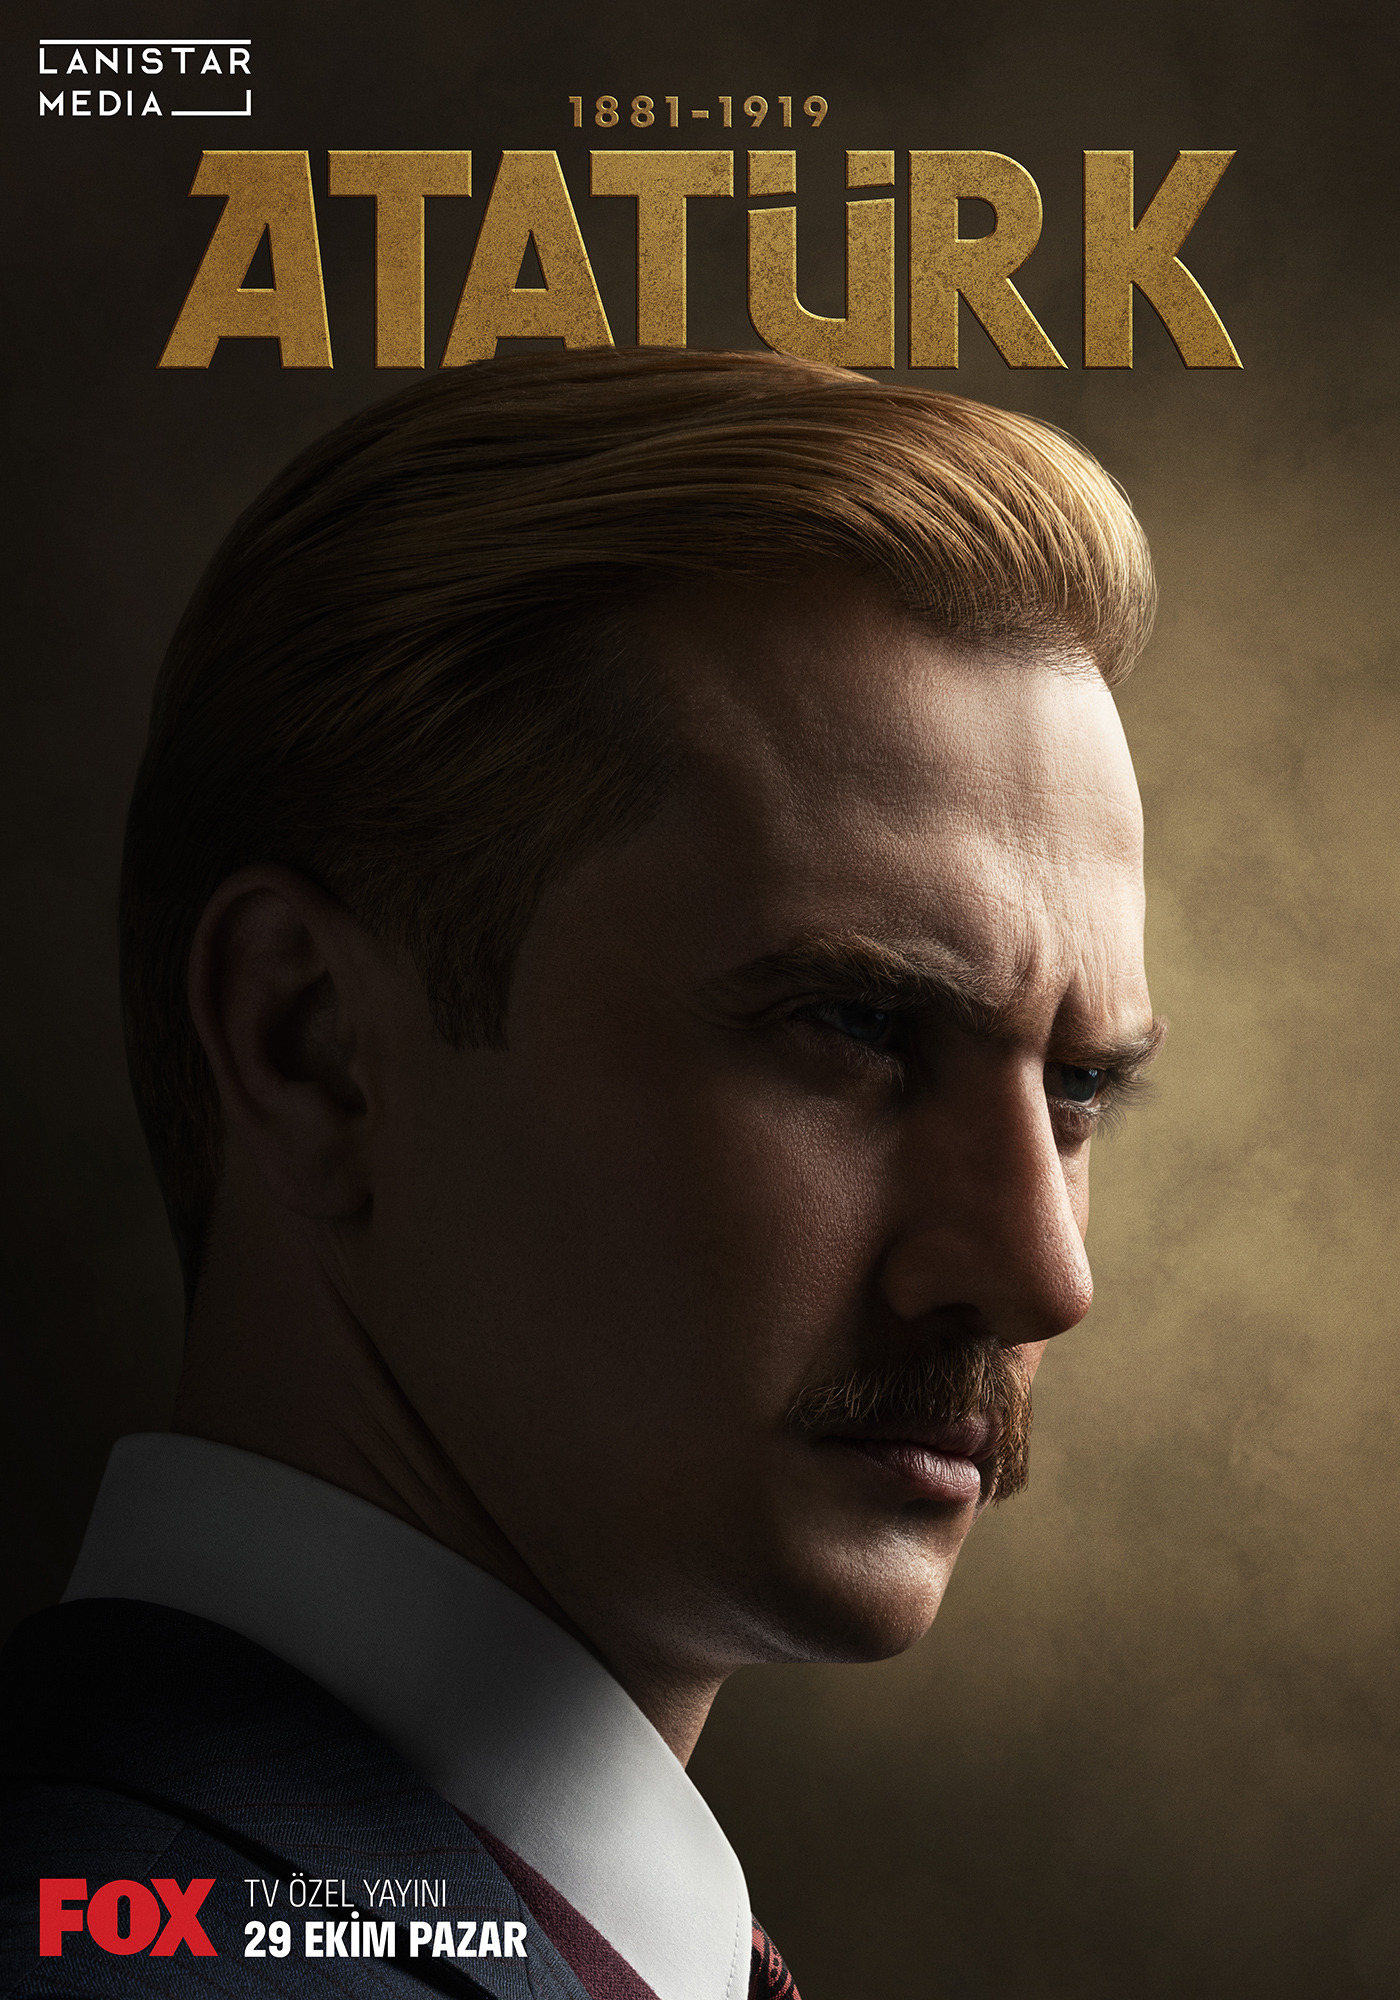 Mega Sized TV Poster Image for Atatürk 1881 - 1919 (#3 of 11)